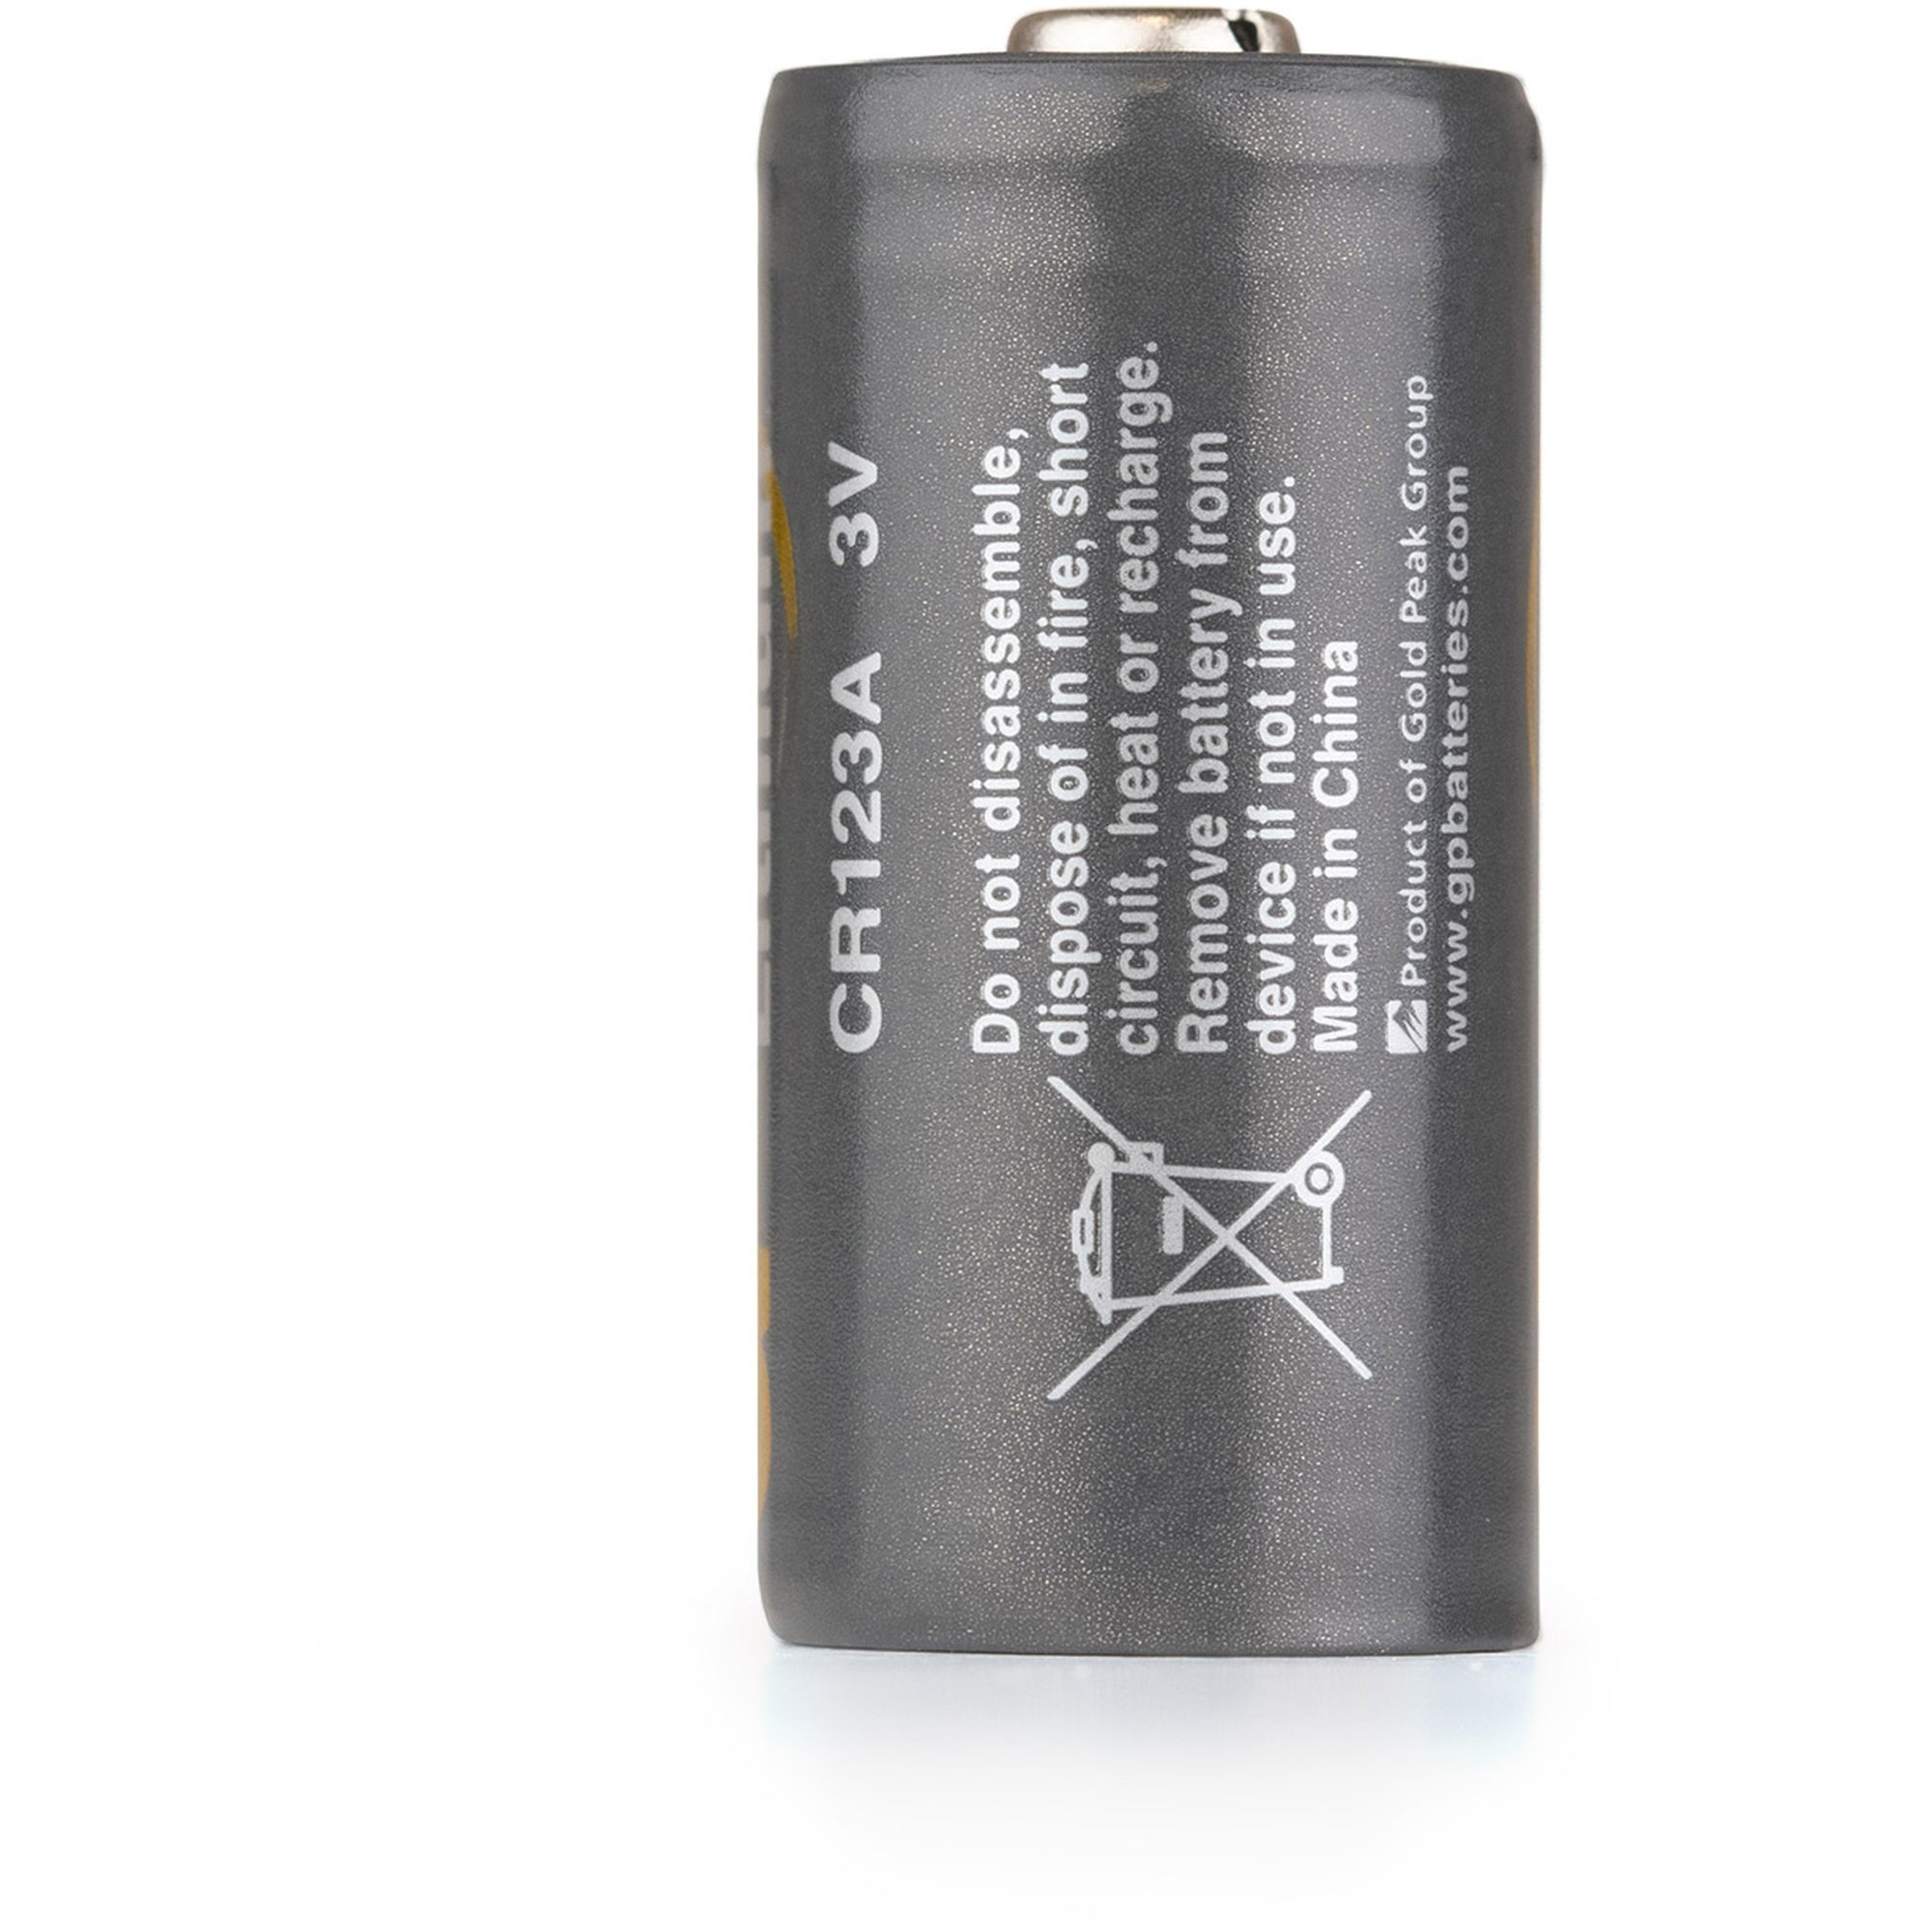 CR123A Batterie GP Lithium 3V 1 Stück